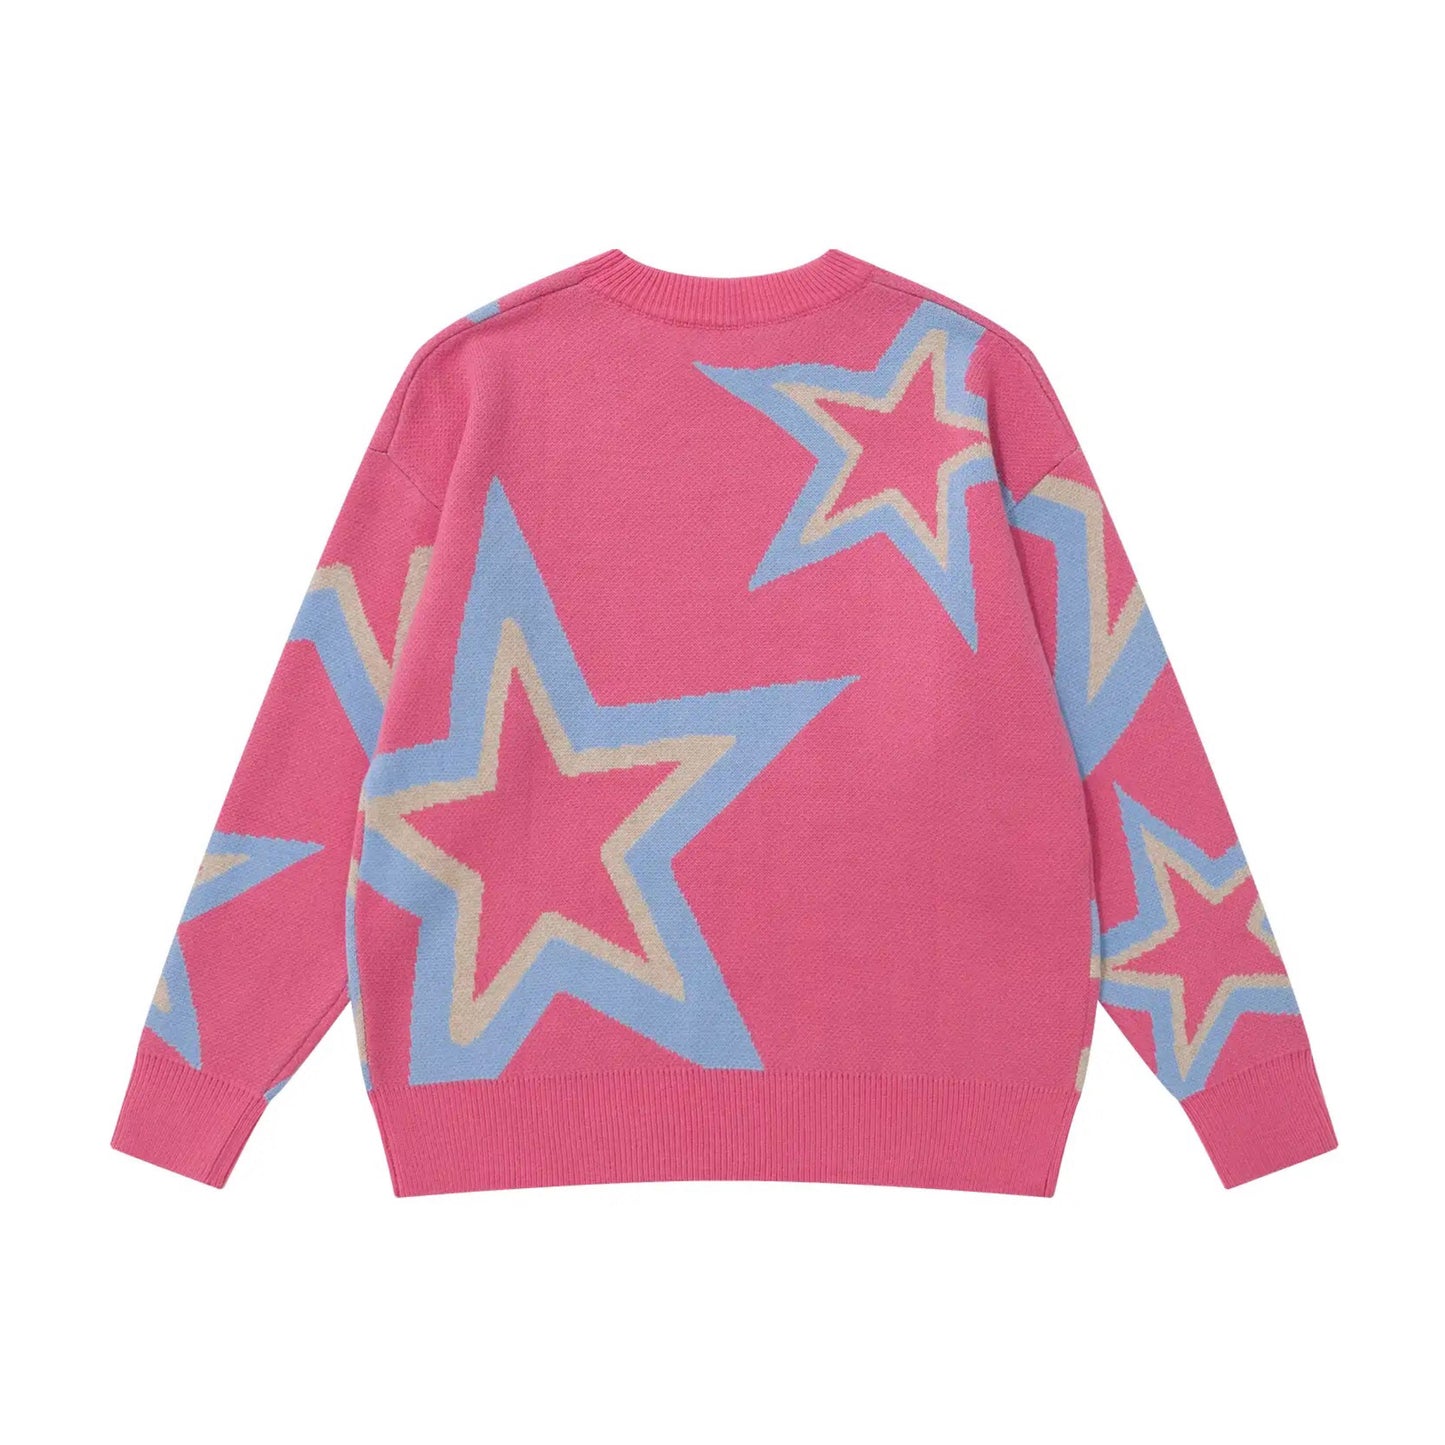 Starry Night Sweater